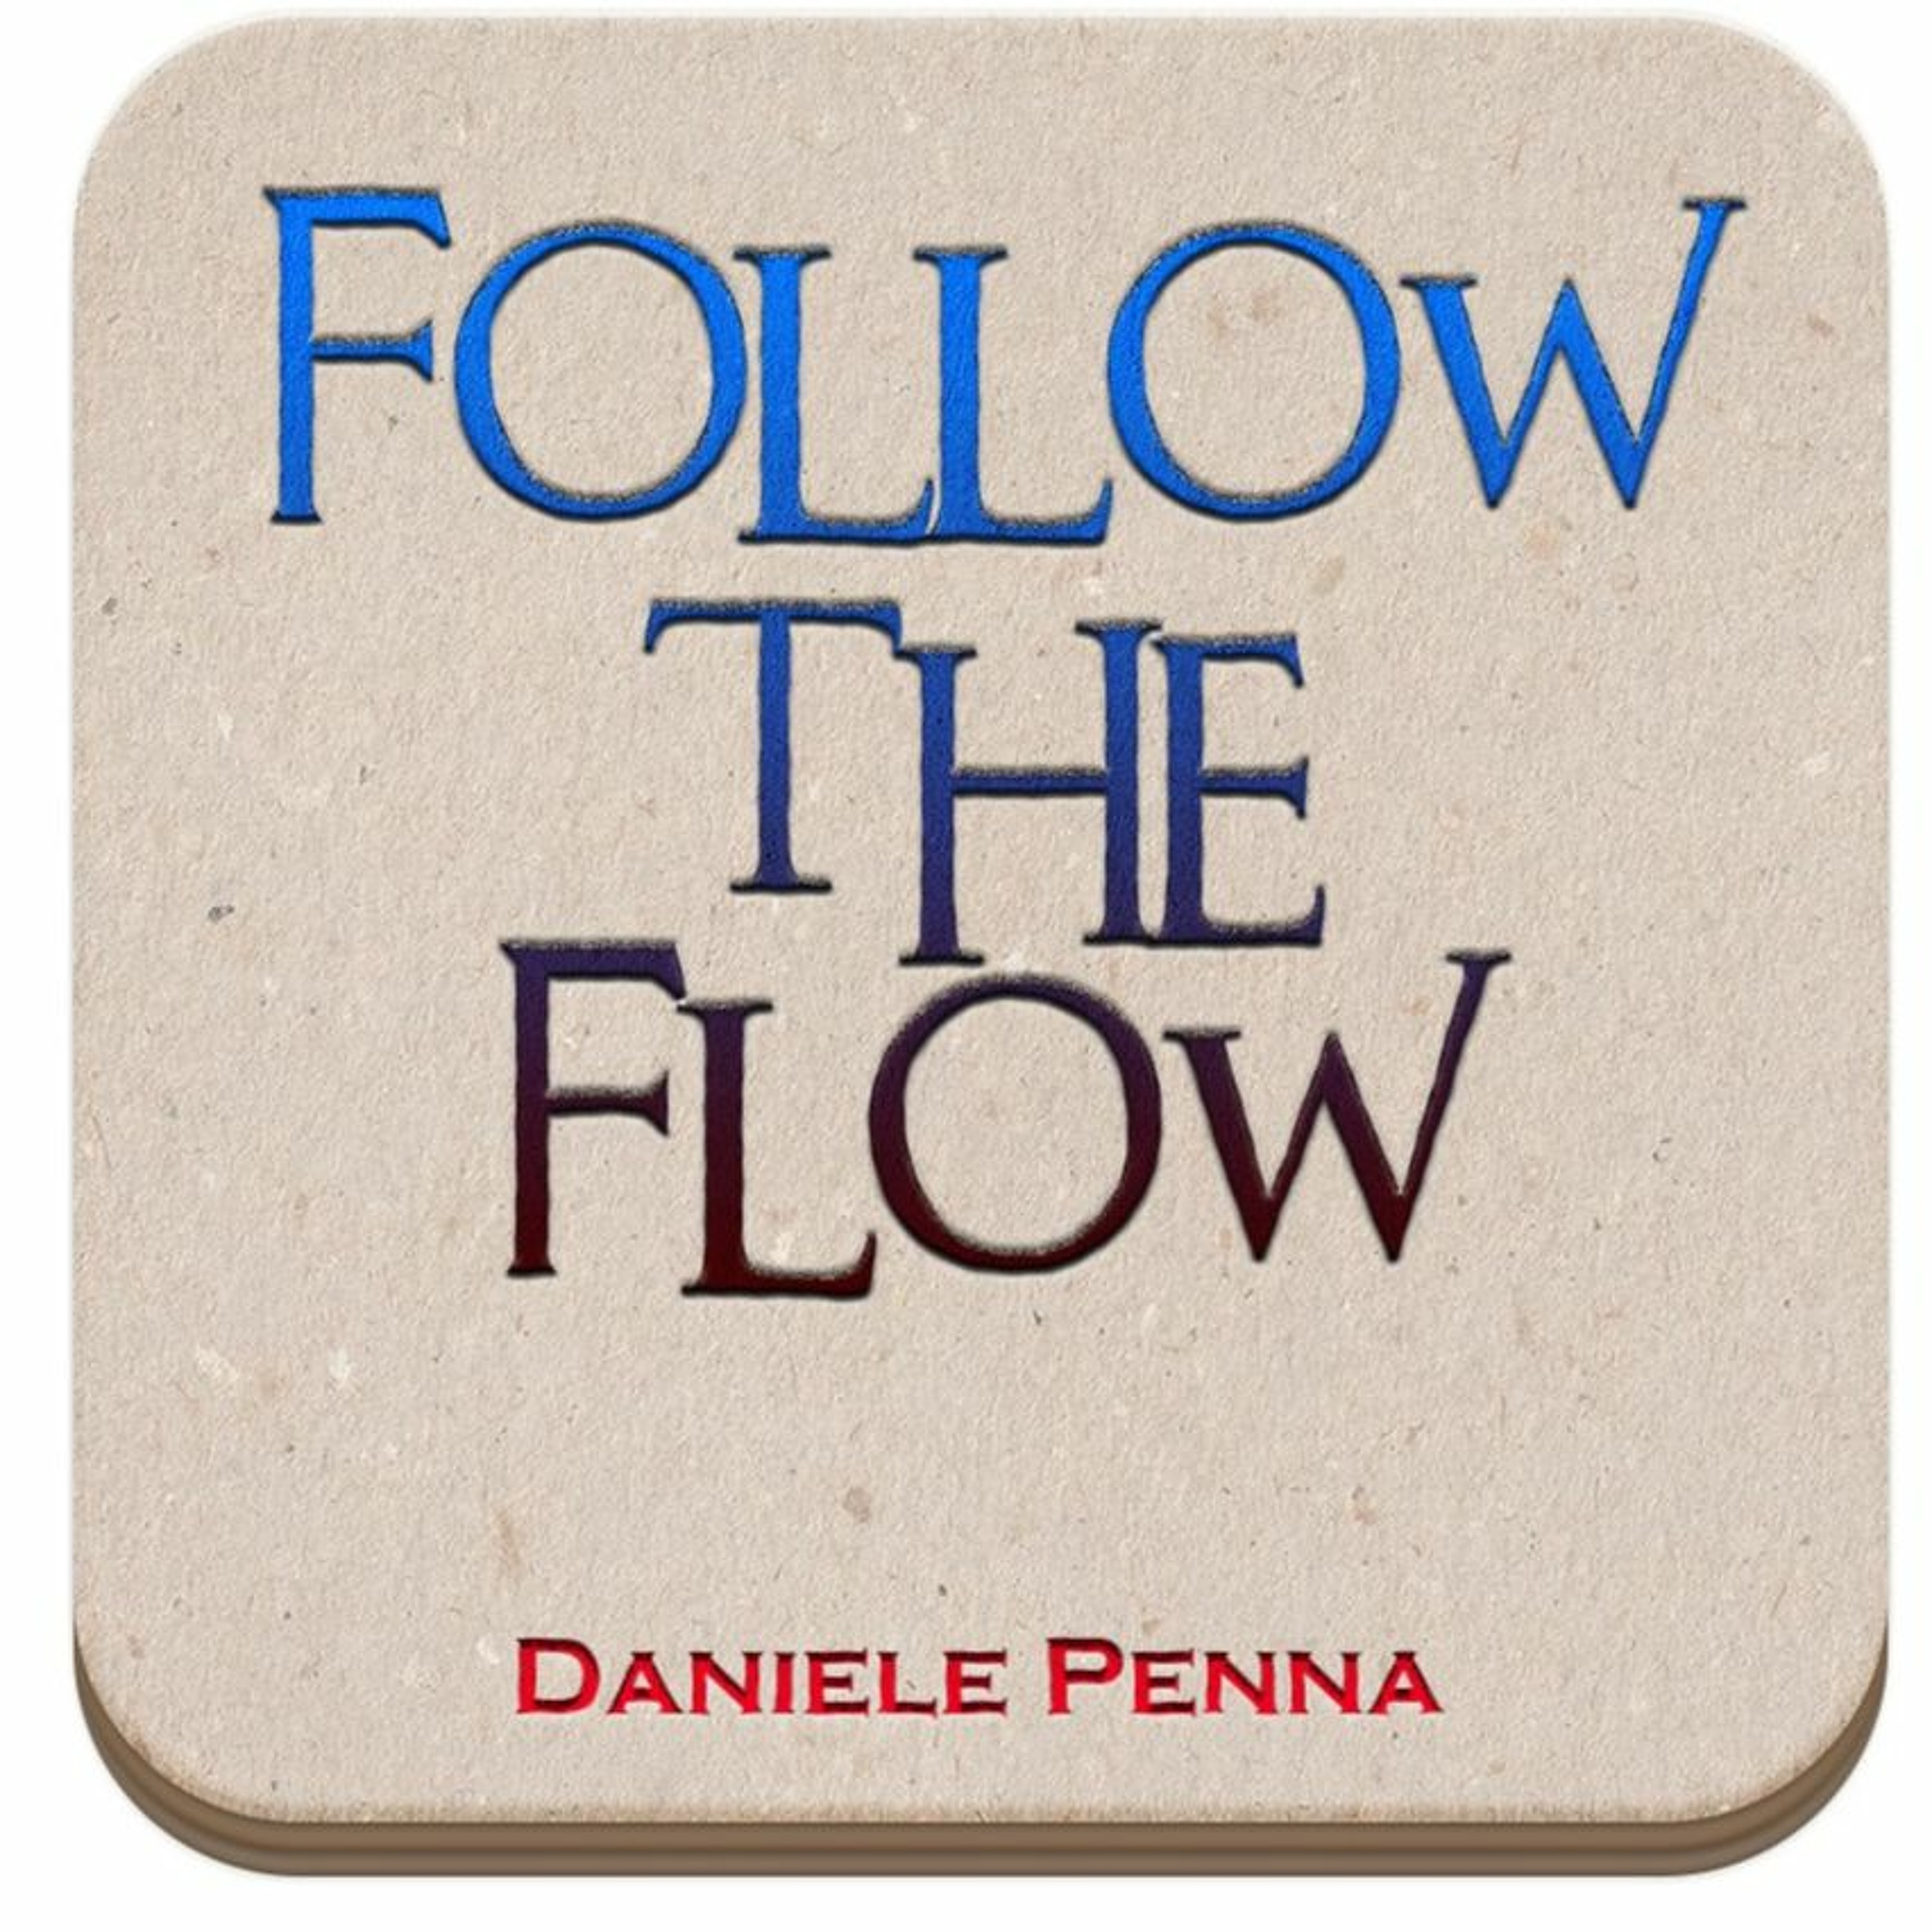 164 - PANDEMIA - Follow The Flow Di Daniele Penna – Daniele Penna